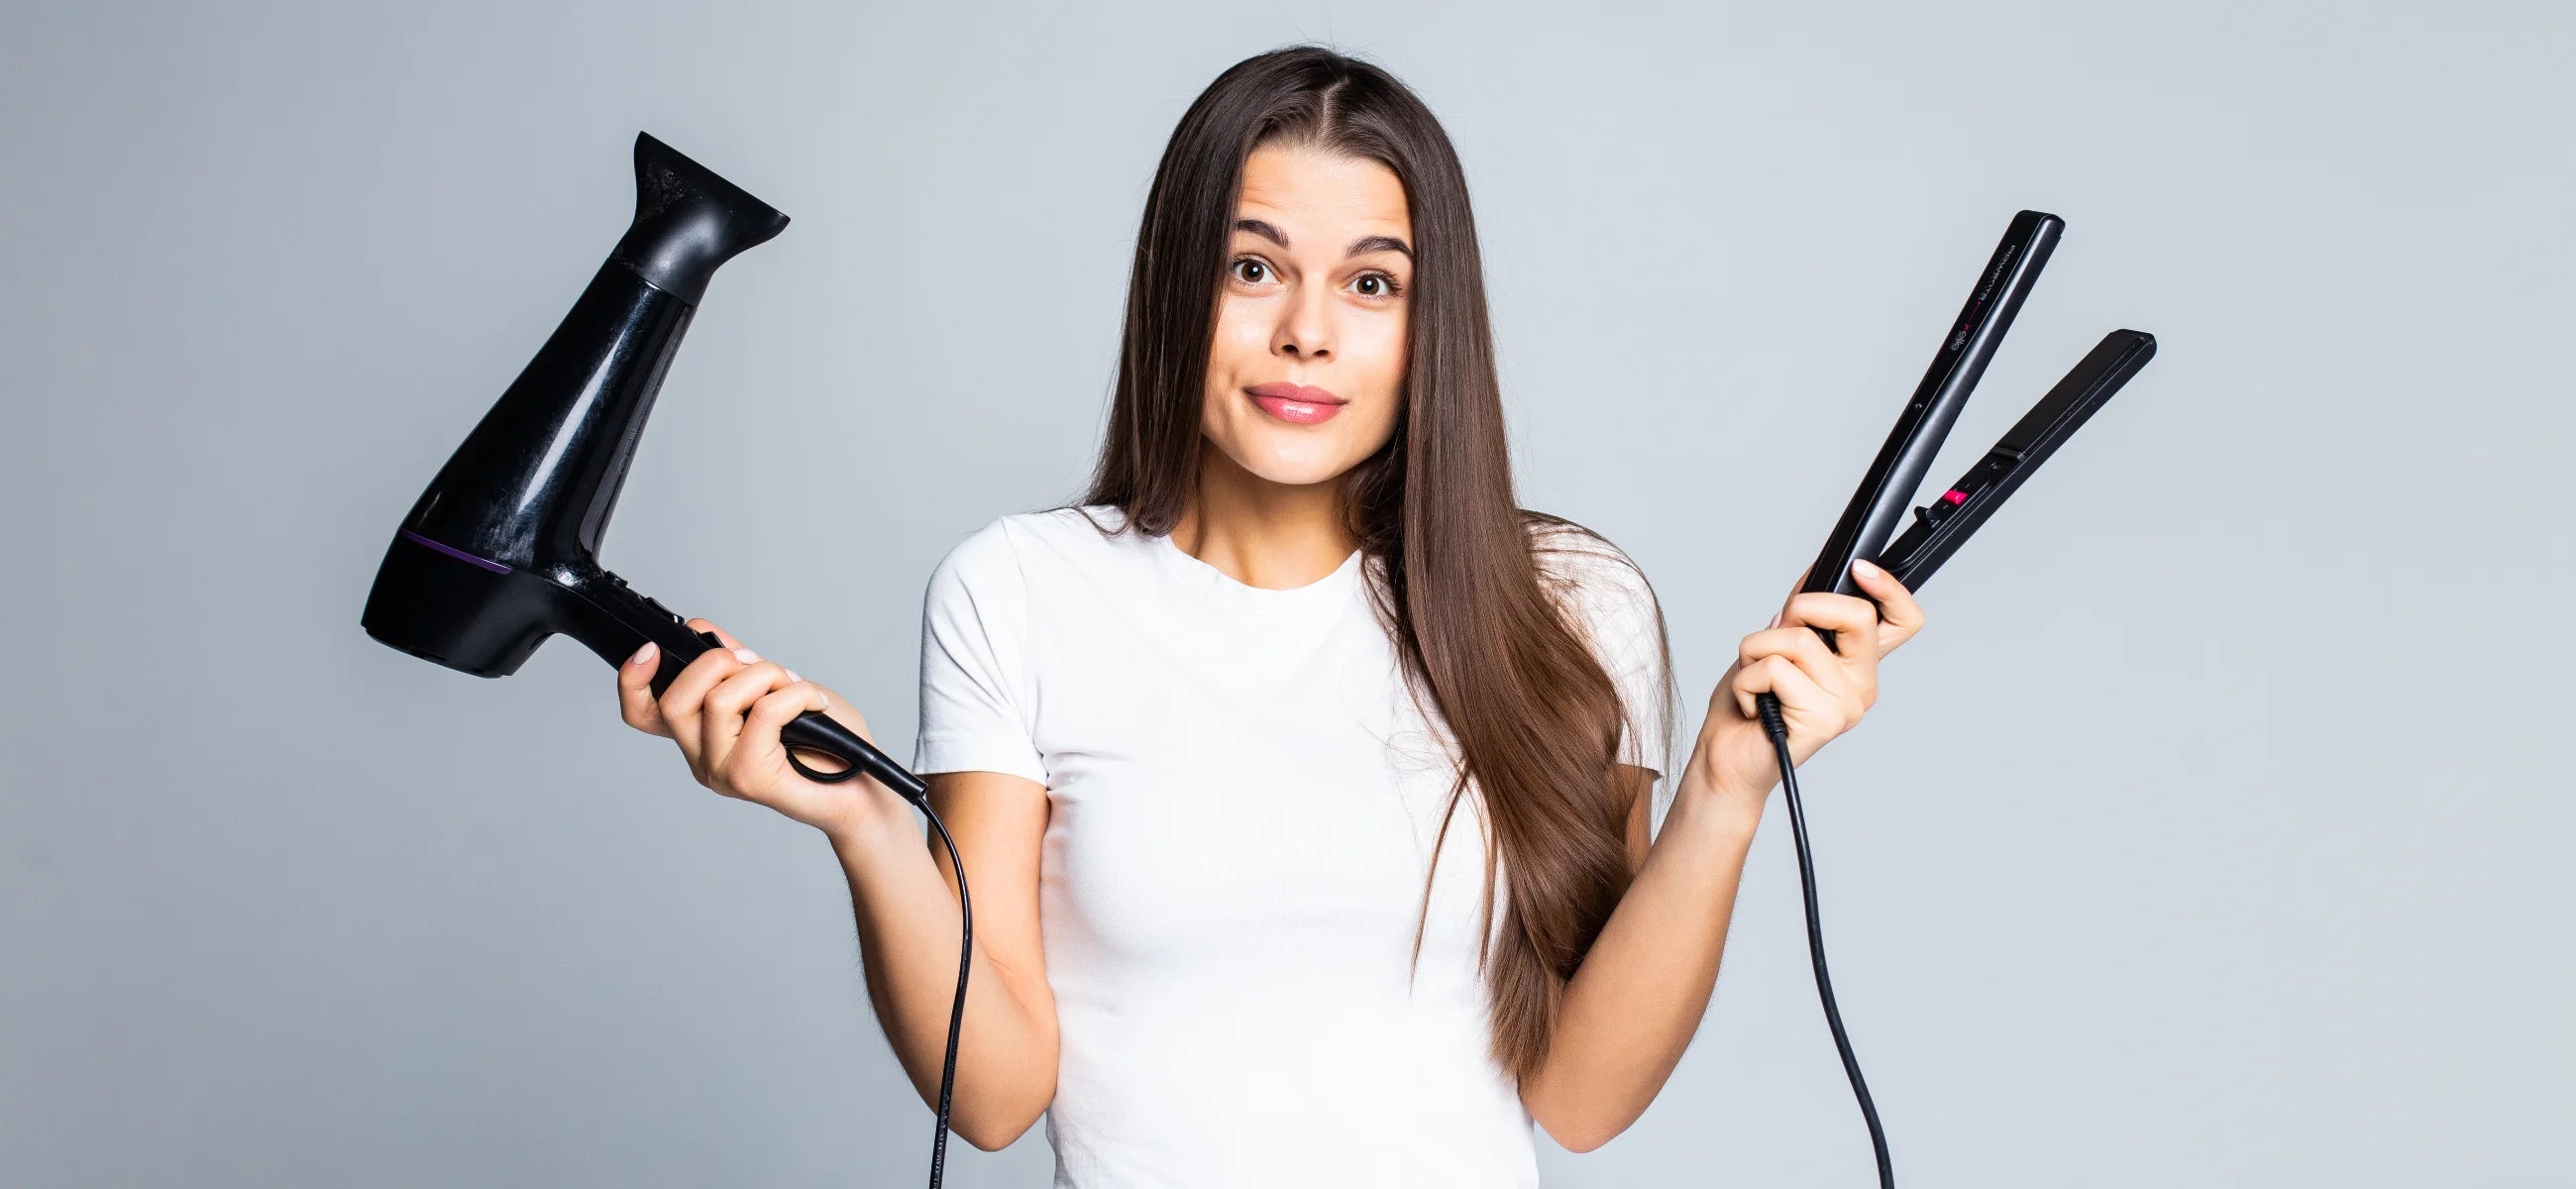 Hair dryer versus hair straightener: What are the distinctions?